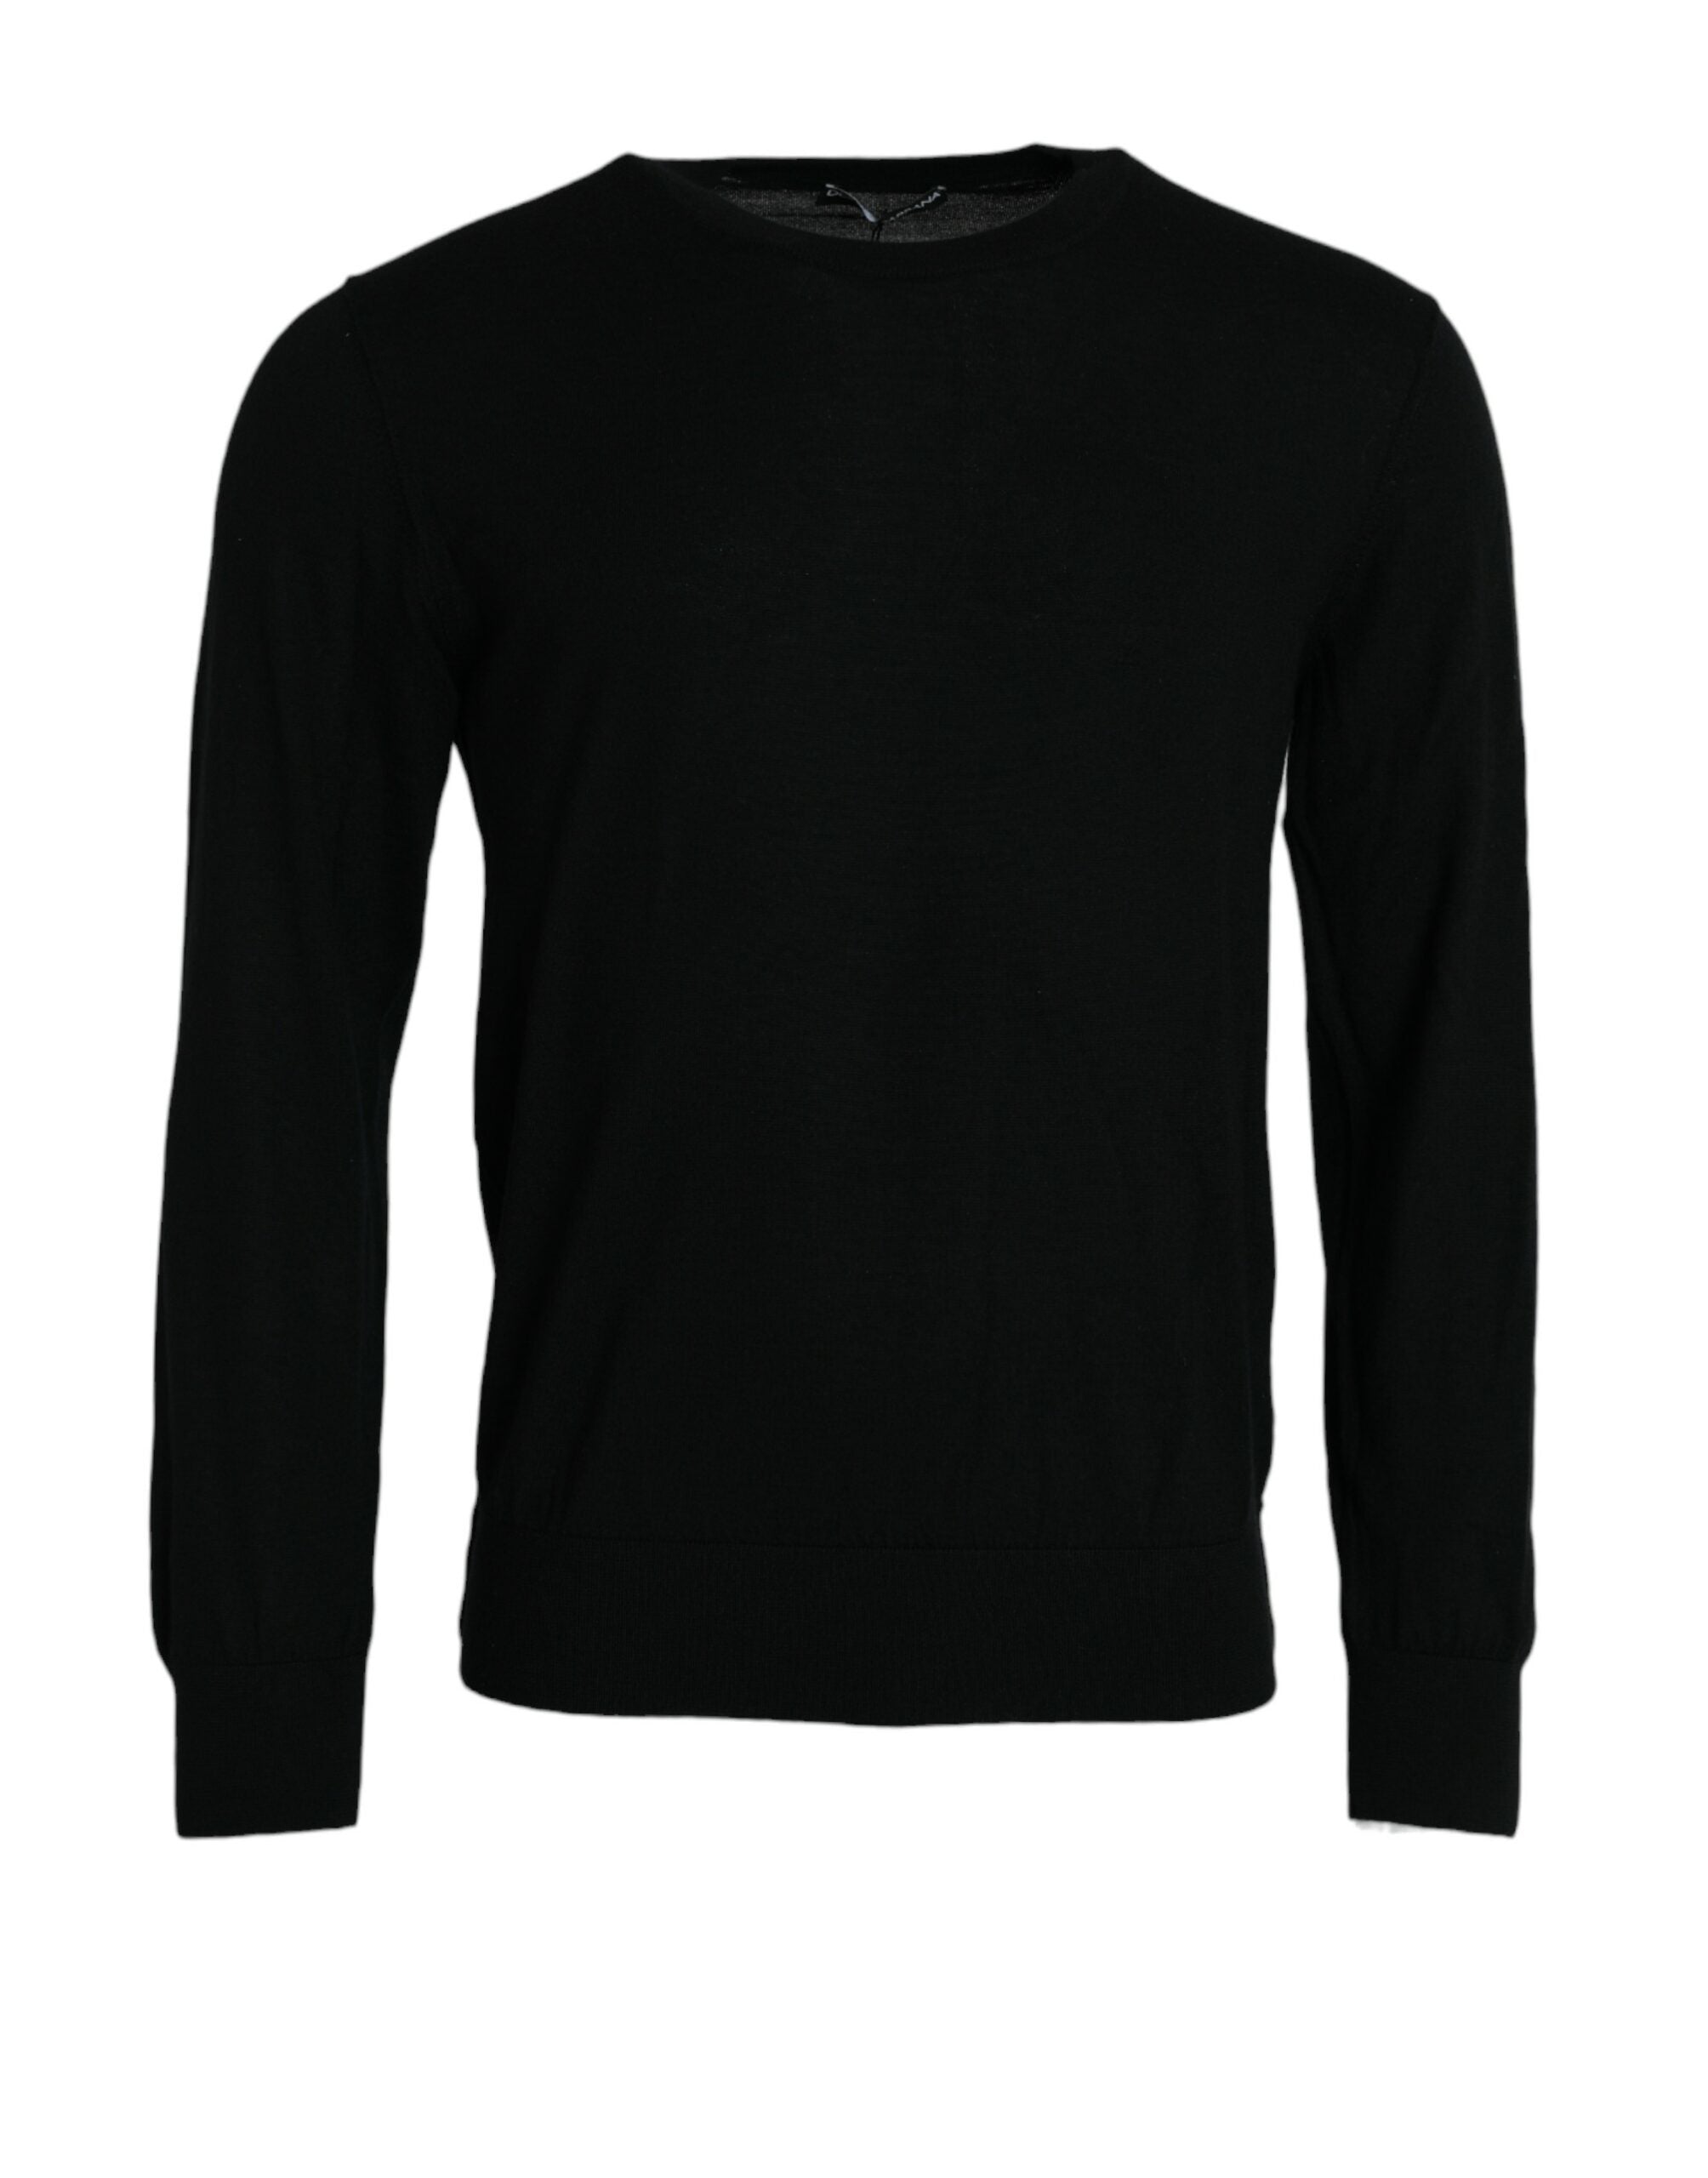 Elegant Black Cashmere Pullover Sweater